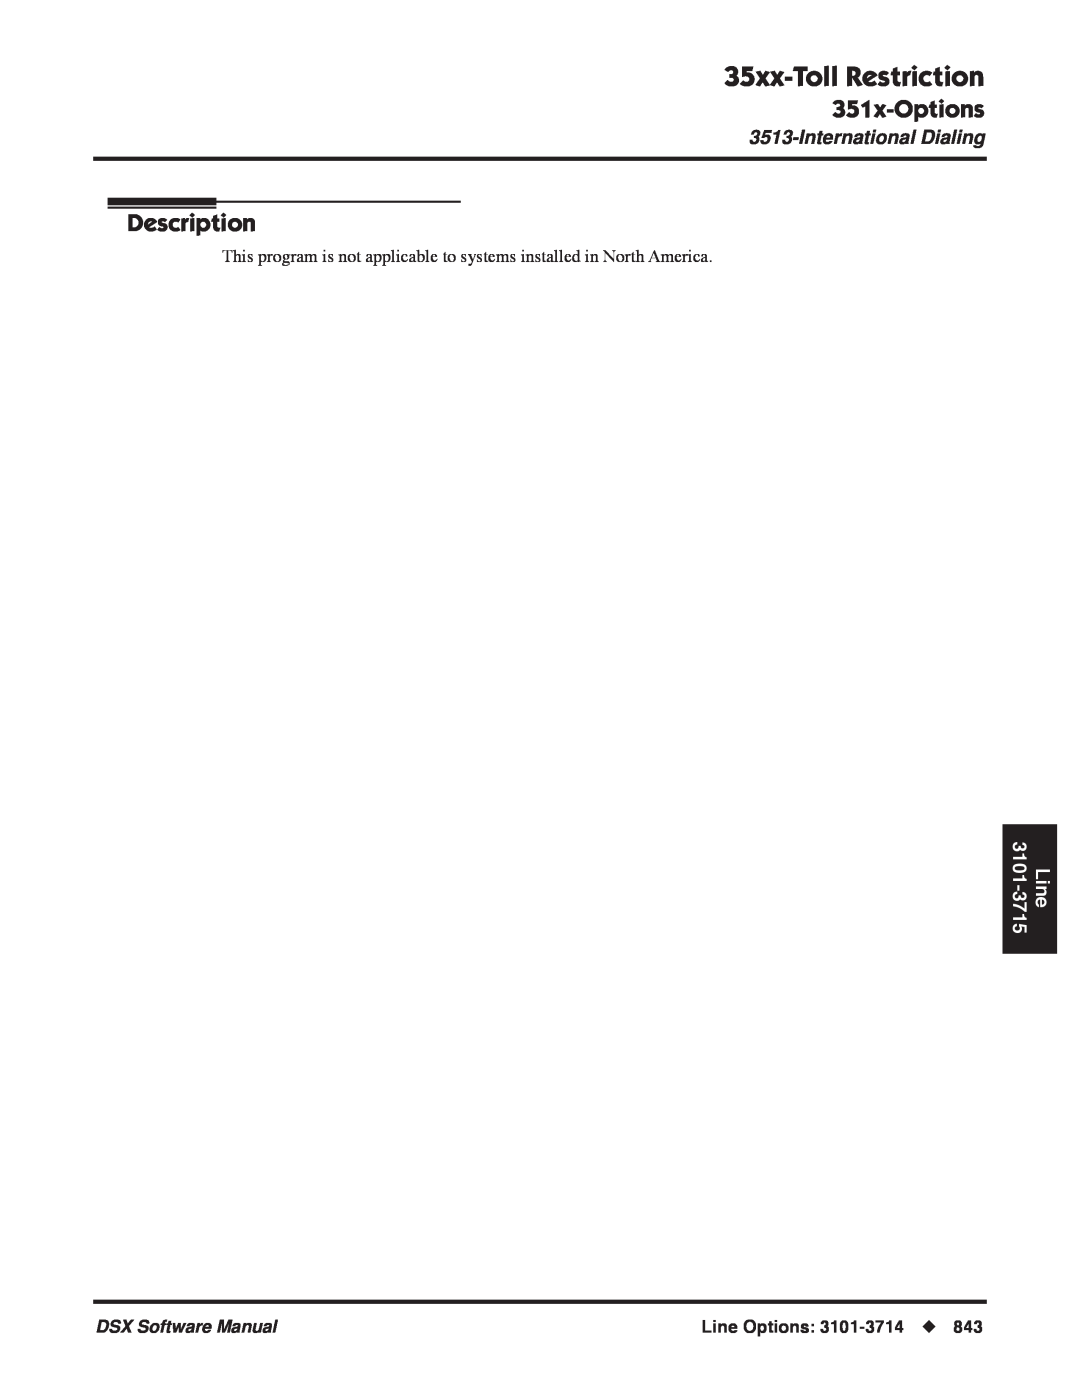 NEC P, N 1093100 35xx-TollRestriction, 351x-Options, Description, InternationalDialing, Line, DSX Software Manual 